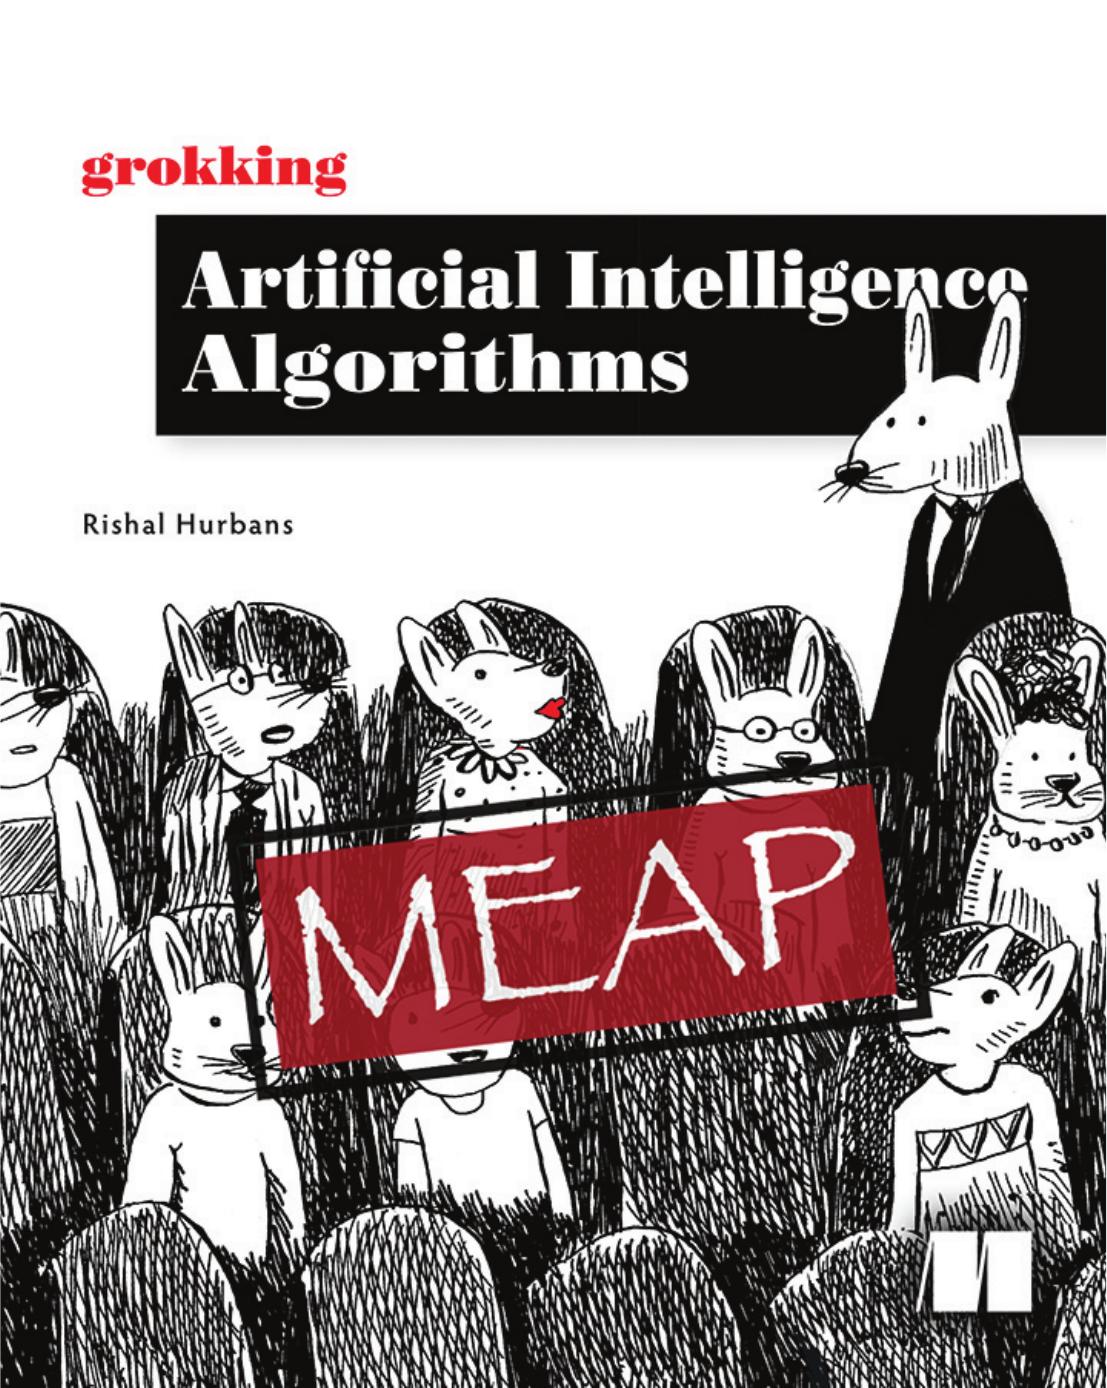 Grokking Artificial Intelligence Algorithms MEAP V05 by Rishal Hurbans